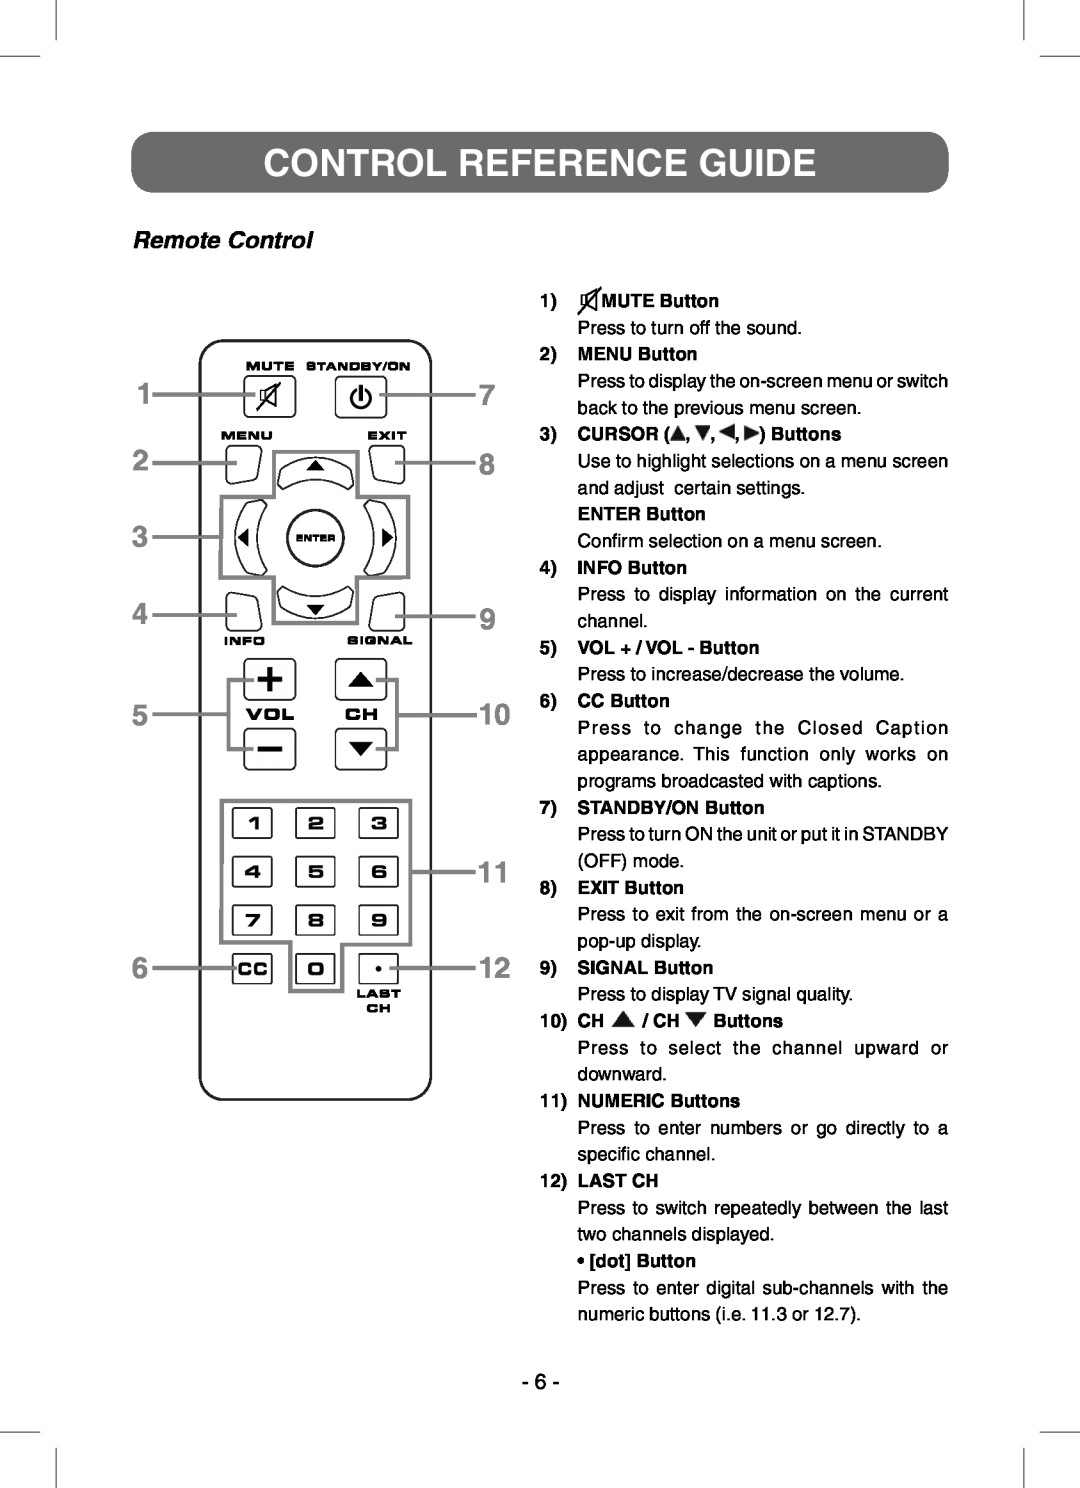 RCA STB7766C Control Reference Guide, Remote Control, MUTE Button, MENU Button, CURSOR , , , Buttons, ENTER Button 